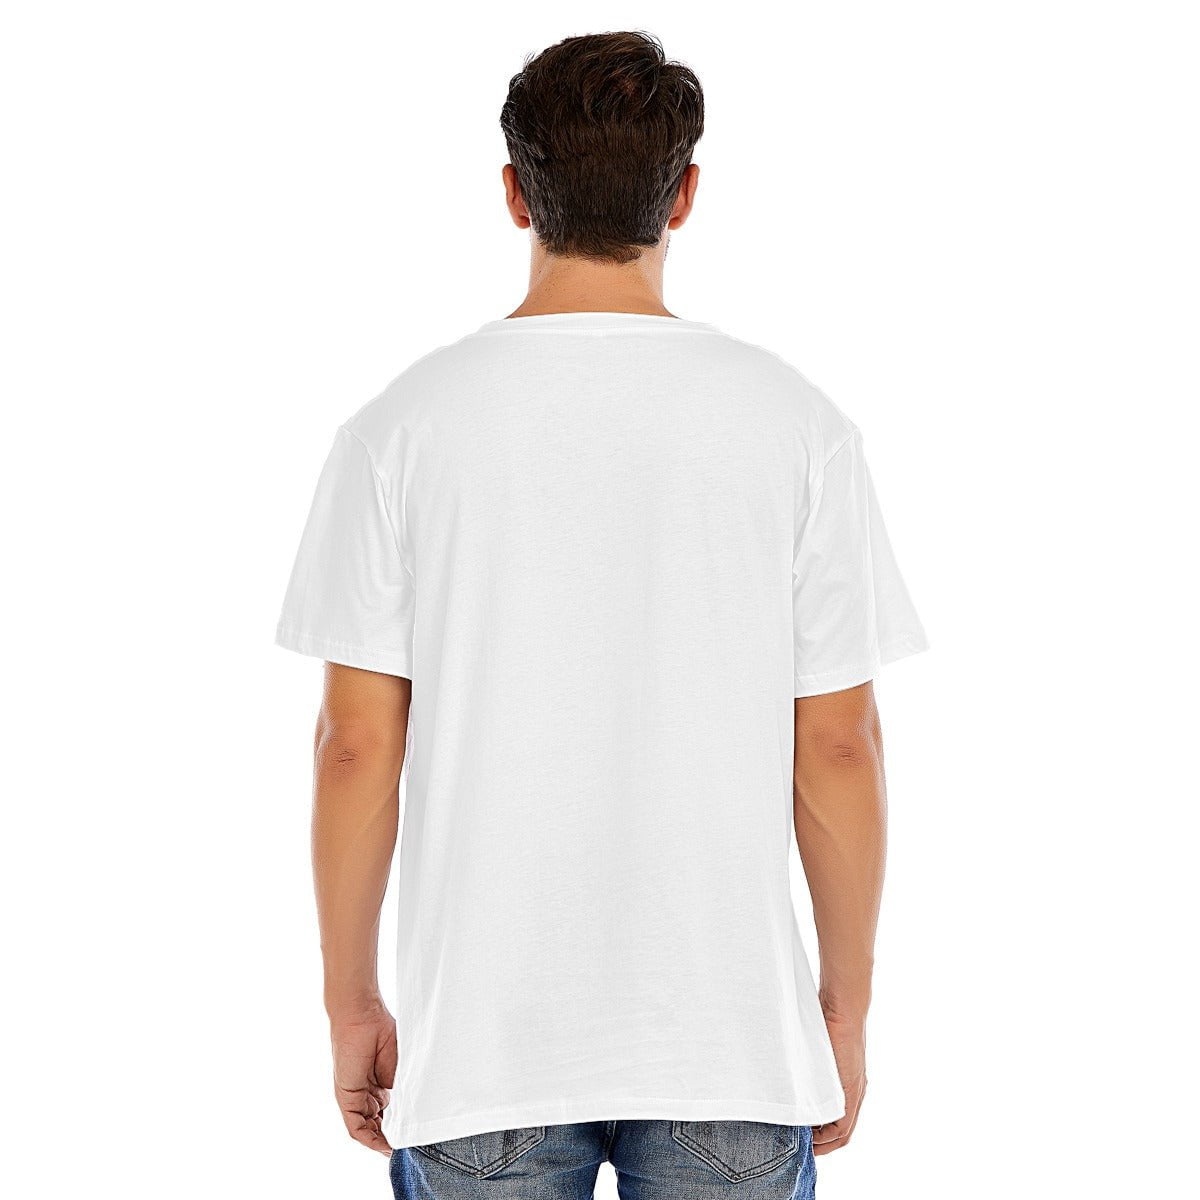 Jerky.com Classic Short Sleeve T-Shirt - White by Yoycol